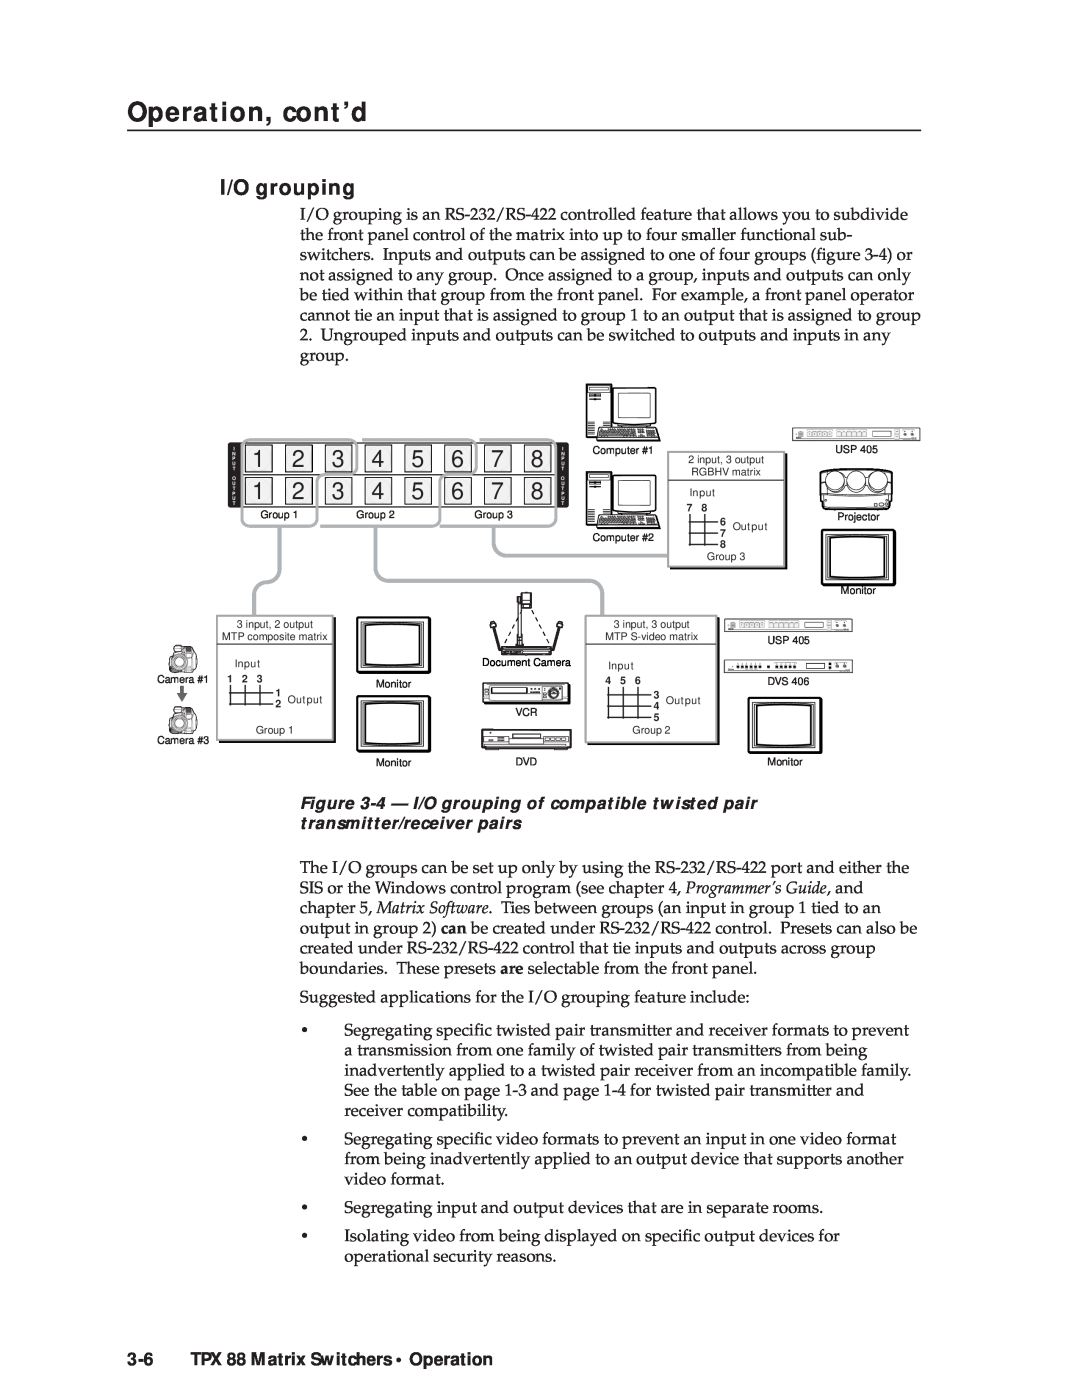 Extron electronic TPX 88 A manual I/O grouping, TPX 88 Matrix Switchers Operation, Operation, cont’d 